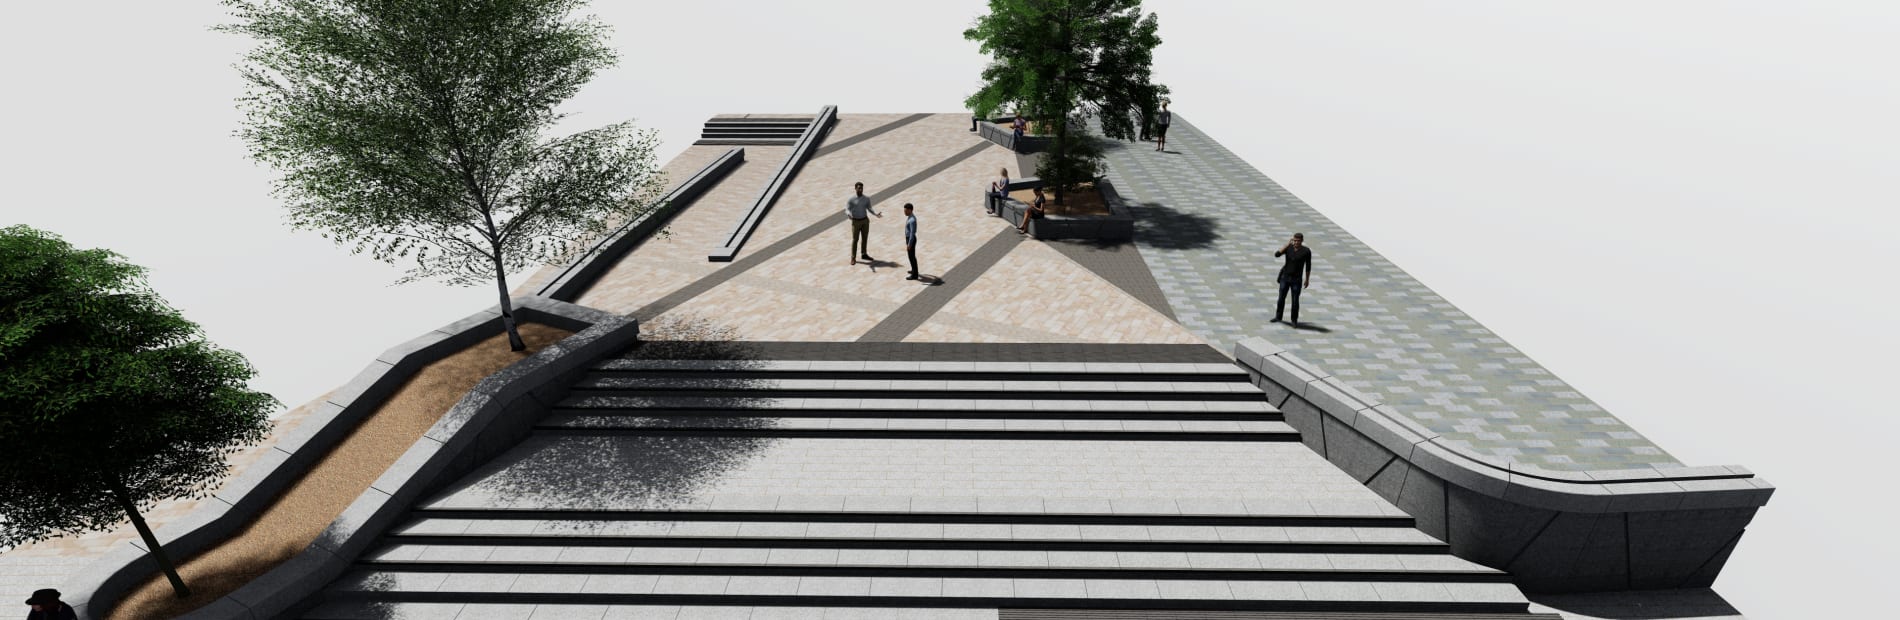 High street visualisation created by Marshalls Design Team